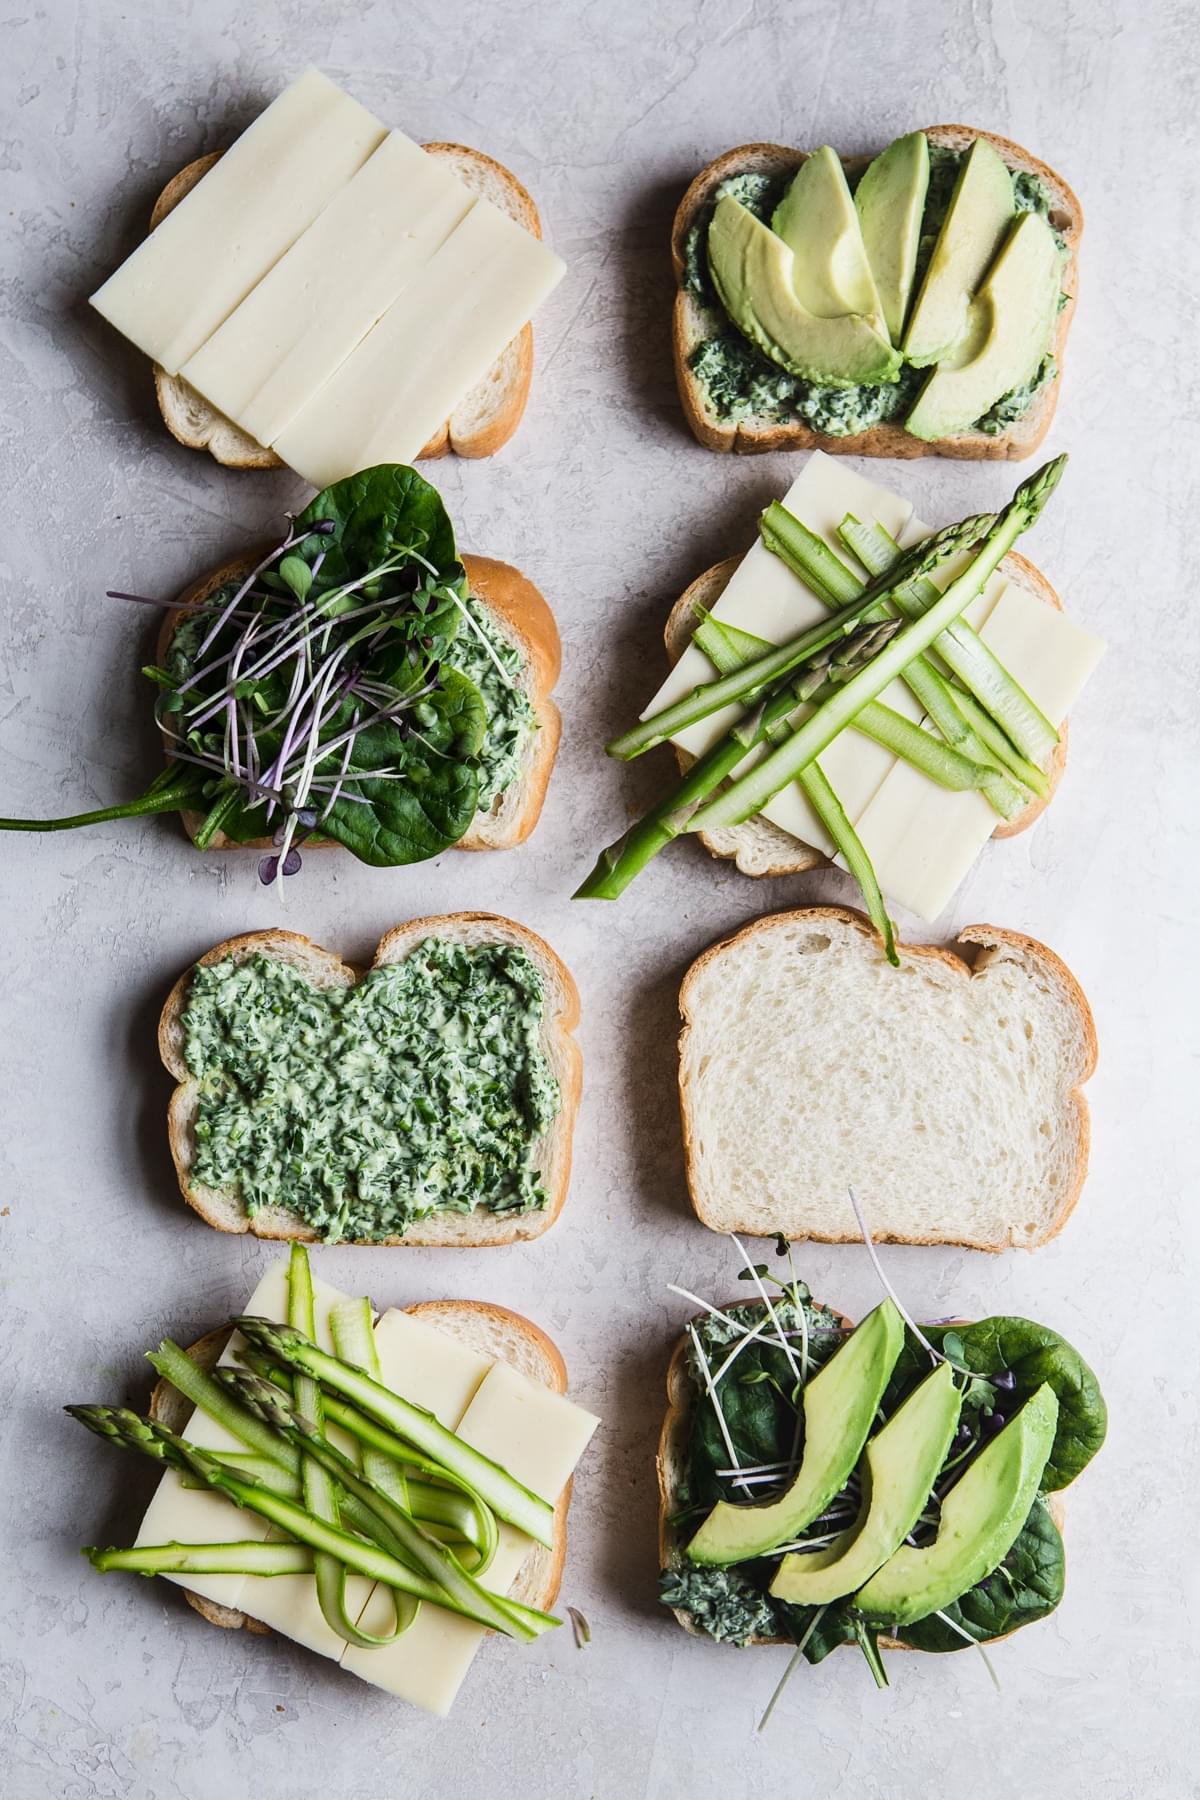 slices of bread with spinach, avocado, mozzarella cheese slices, green goddess spread and asparagus